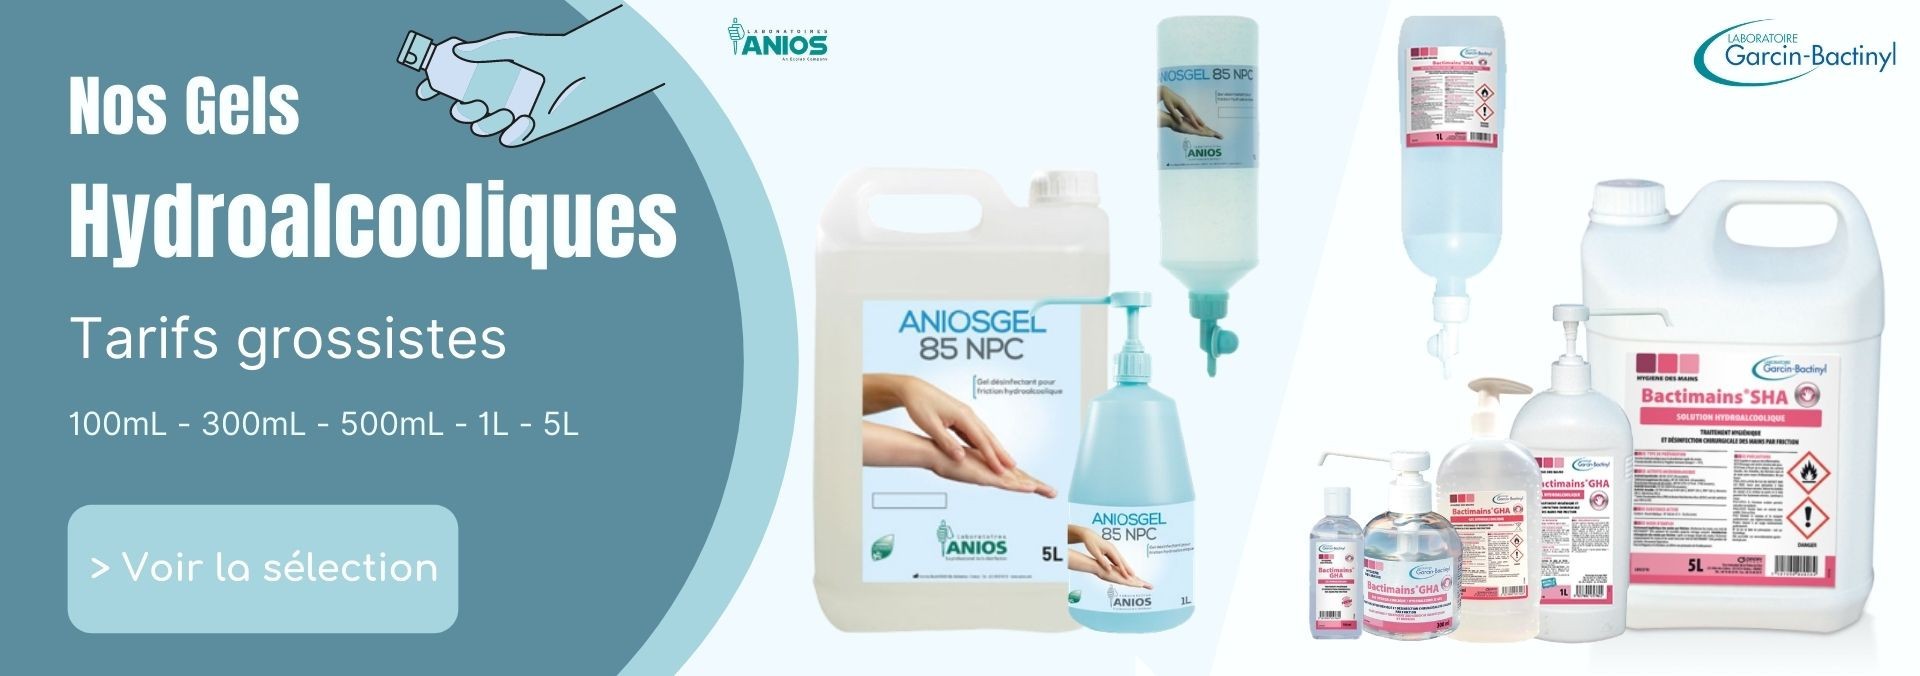 Gel hydroalcoolique Aniosgel & Bactimains SHA